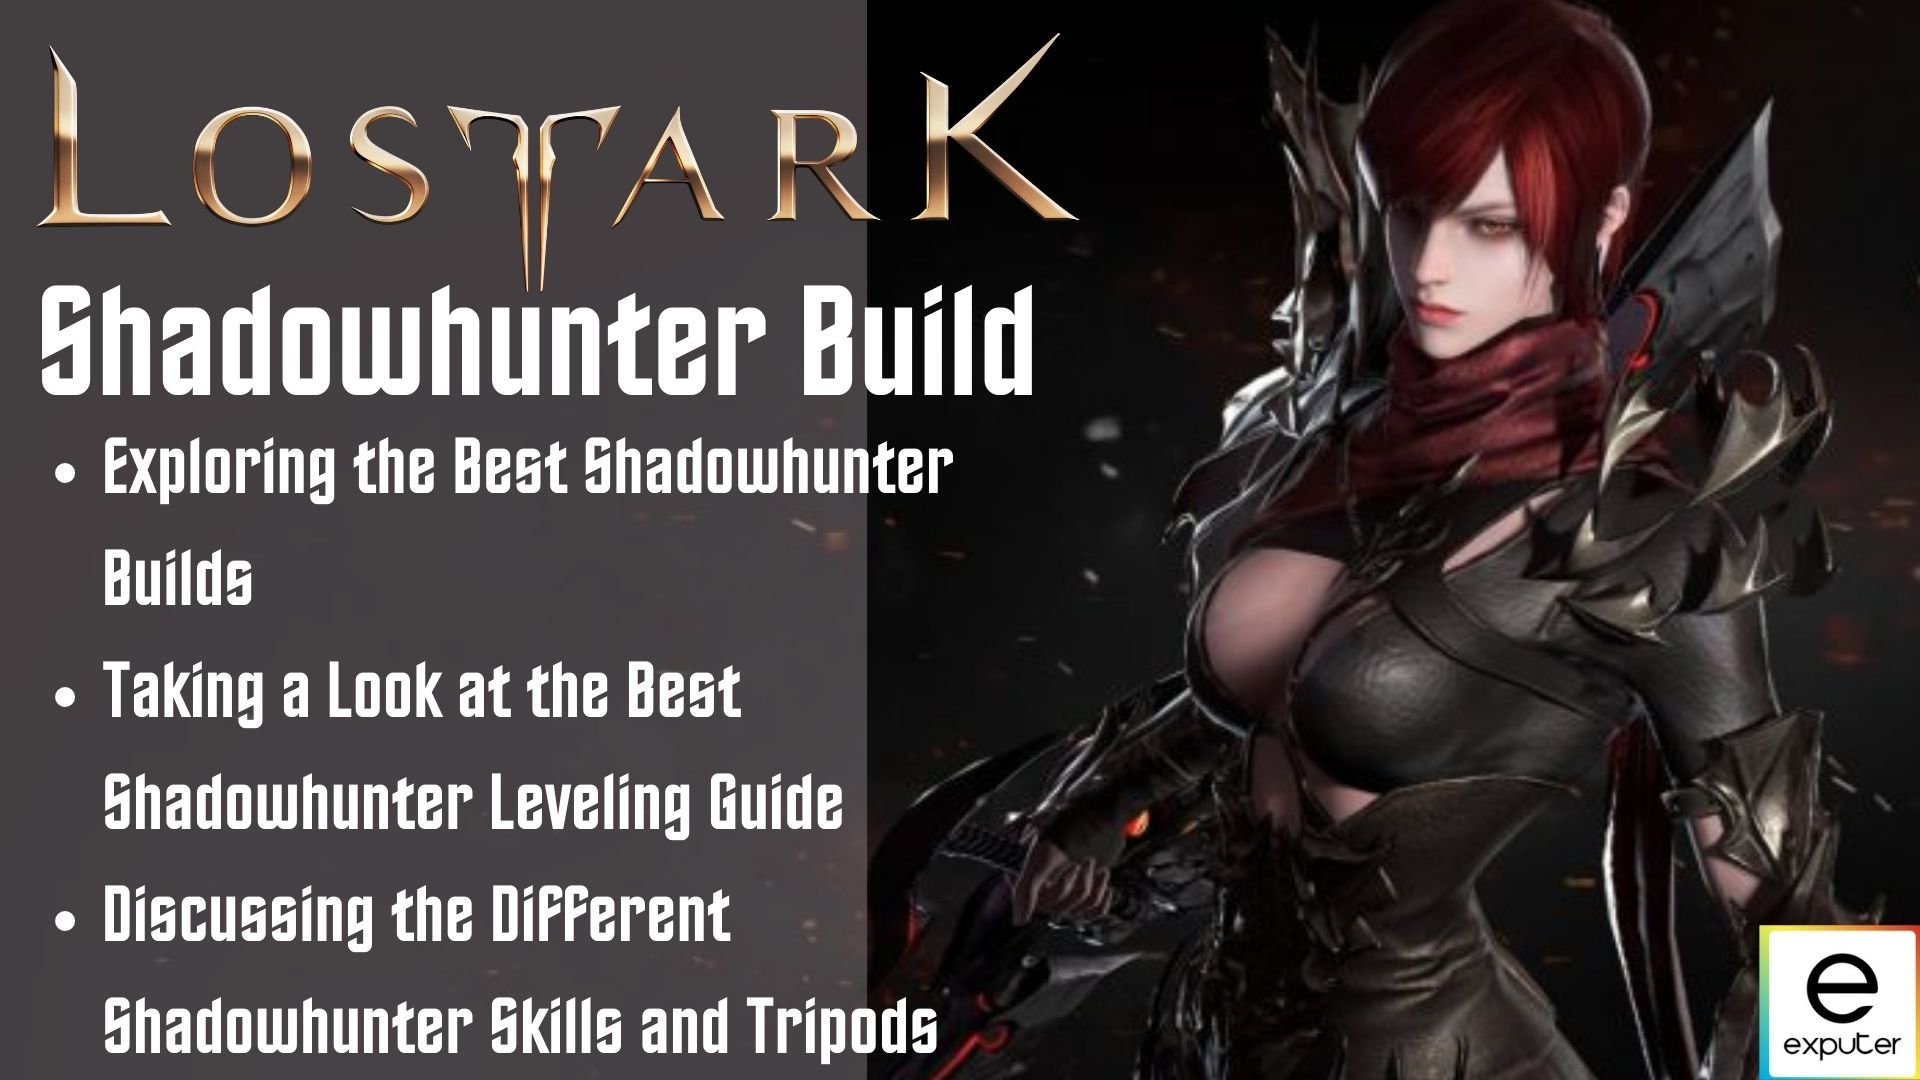 Lost Ark Devil Hunter (Deadeye) Class Guide/Builds: PVP/PVE, Gameplay, DPS,  Stats, Skills